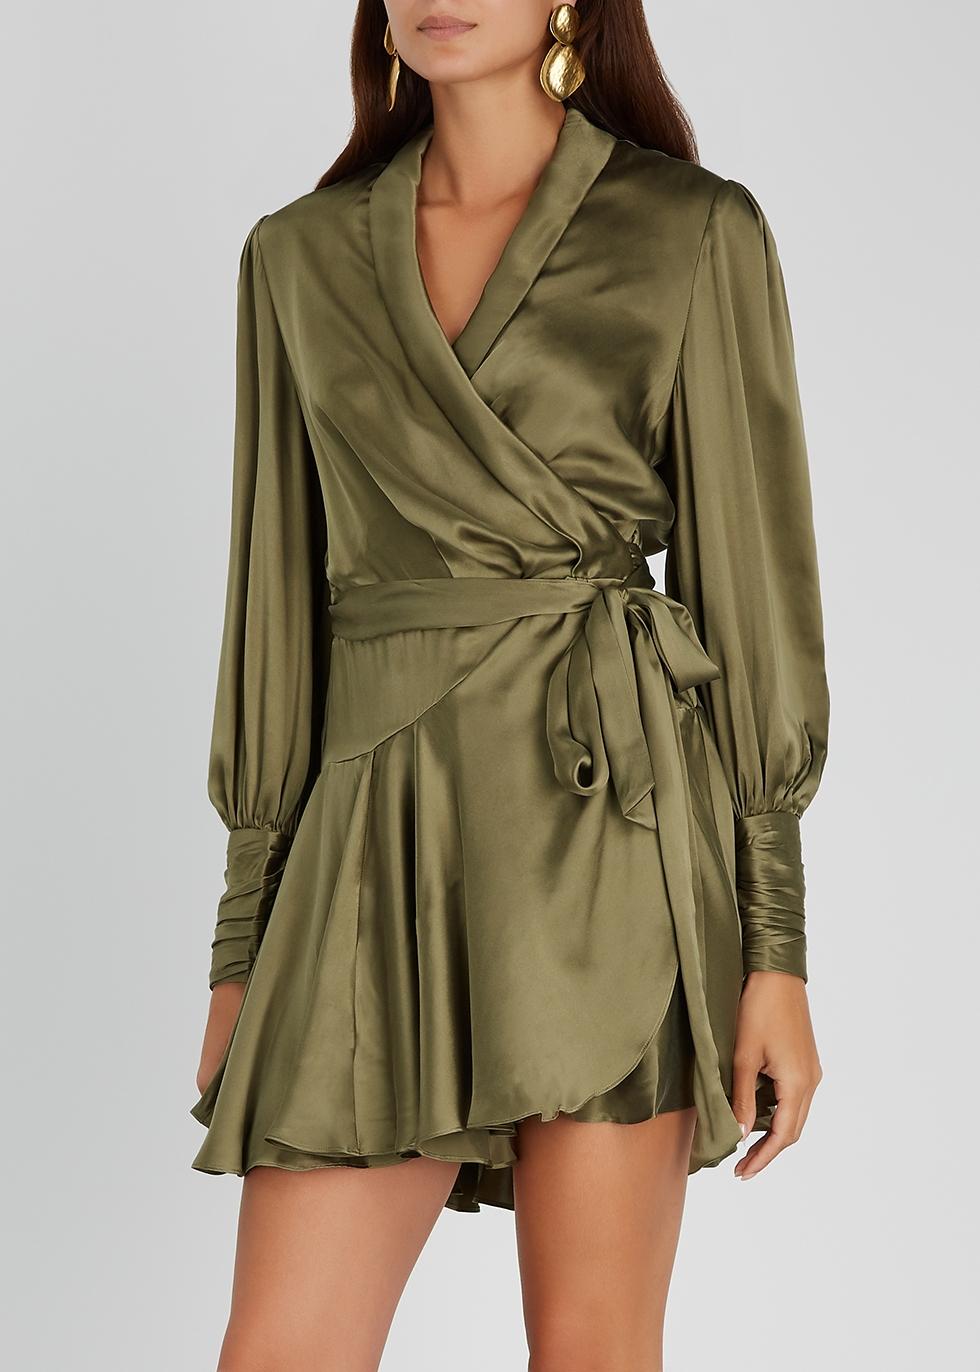 Zimmermann Olive Silk-satin Wrap Dress in Green | Lyst